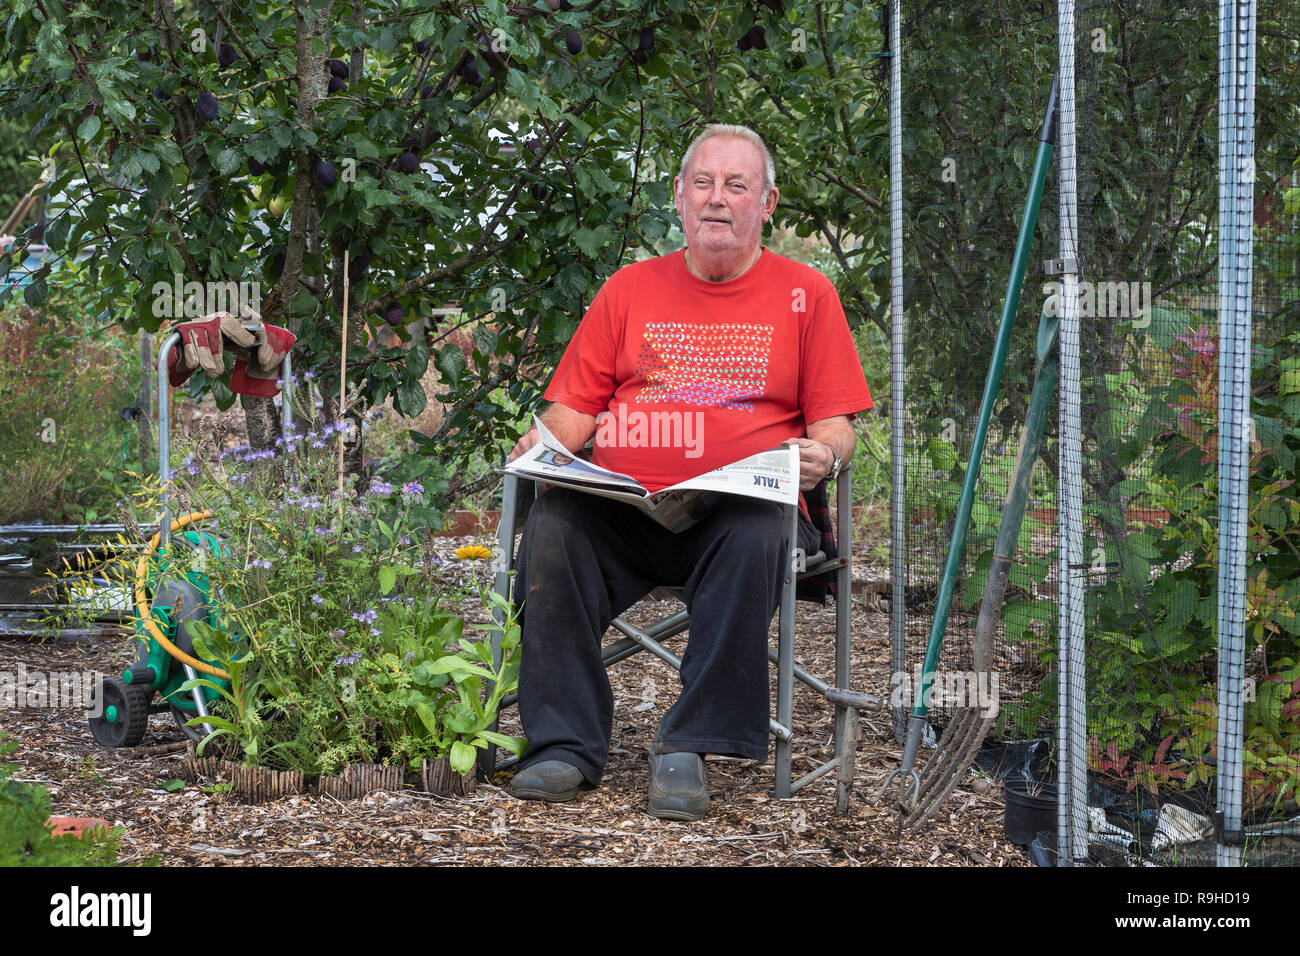 Plot 8, Gus Bothwell reading his newspaper at Eglinton Growers, Kilwinning, Ayrshire, Scotland, UK Stock Photo